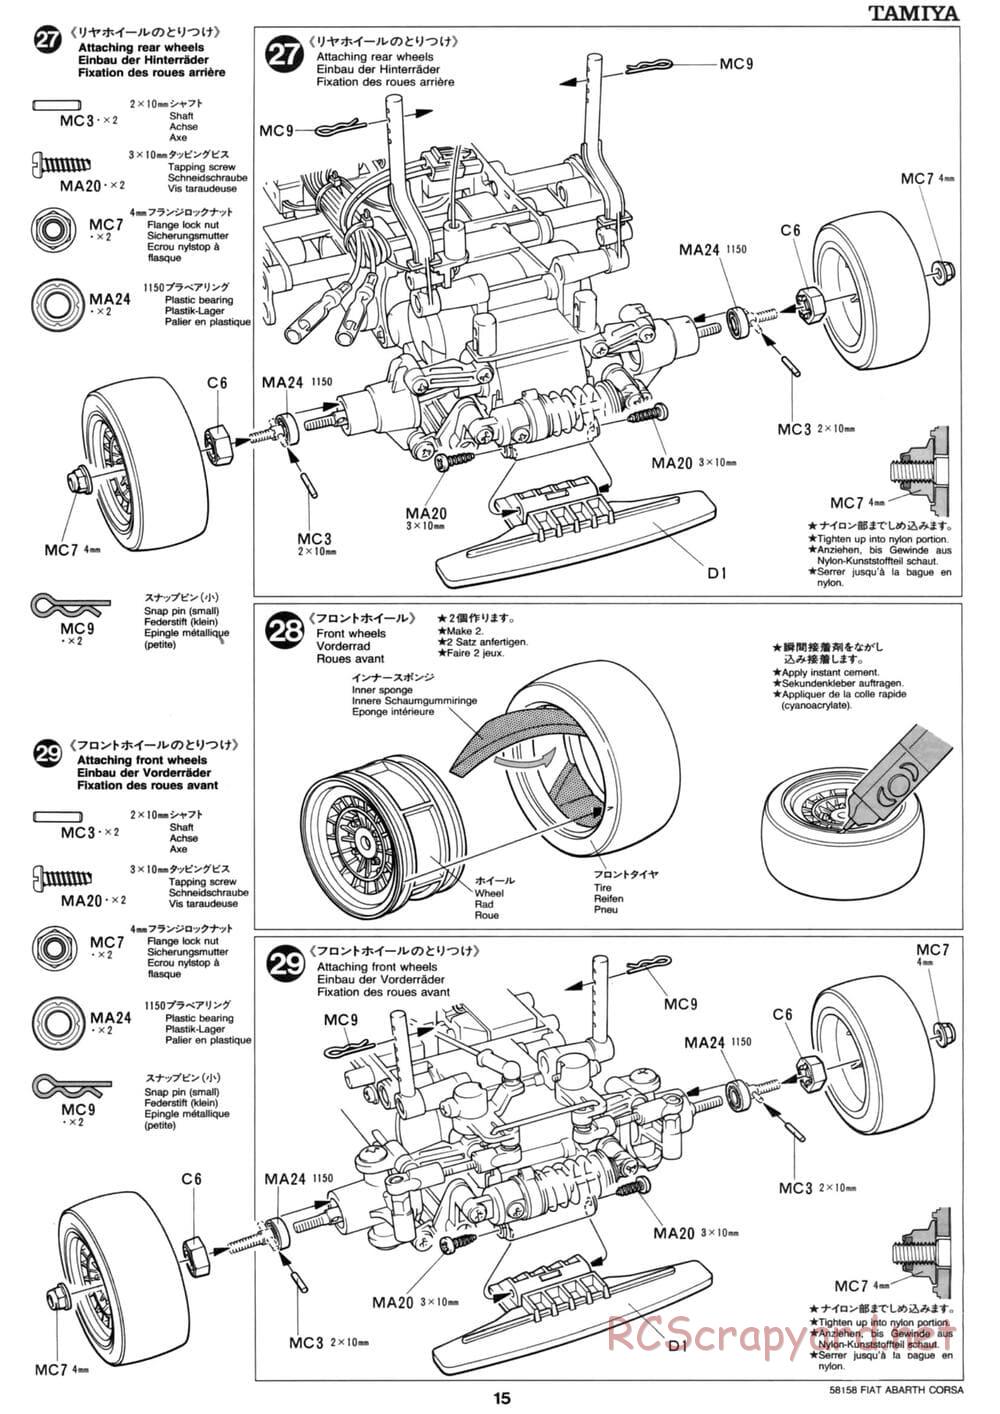 Tamiya - Fiat Abarth 1000 TCR Berlina Corse - M02 Chassis - Manual - Page 15